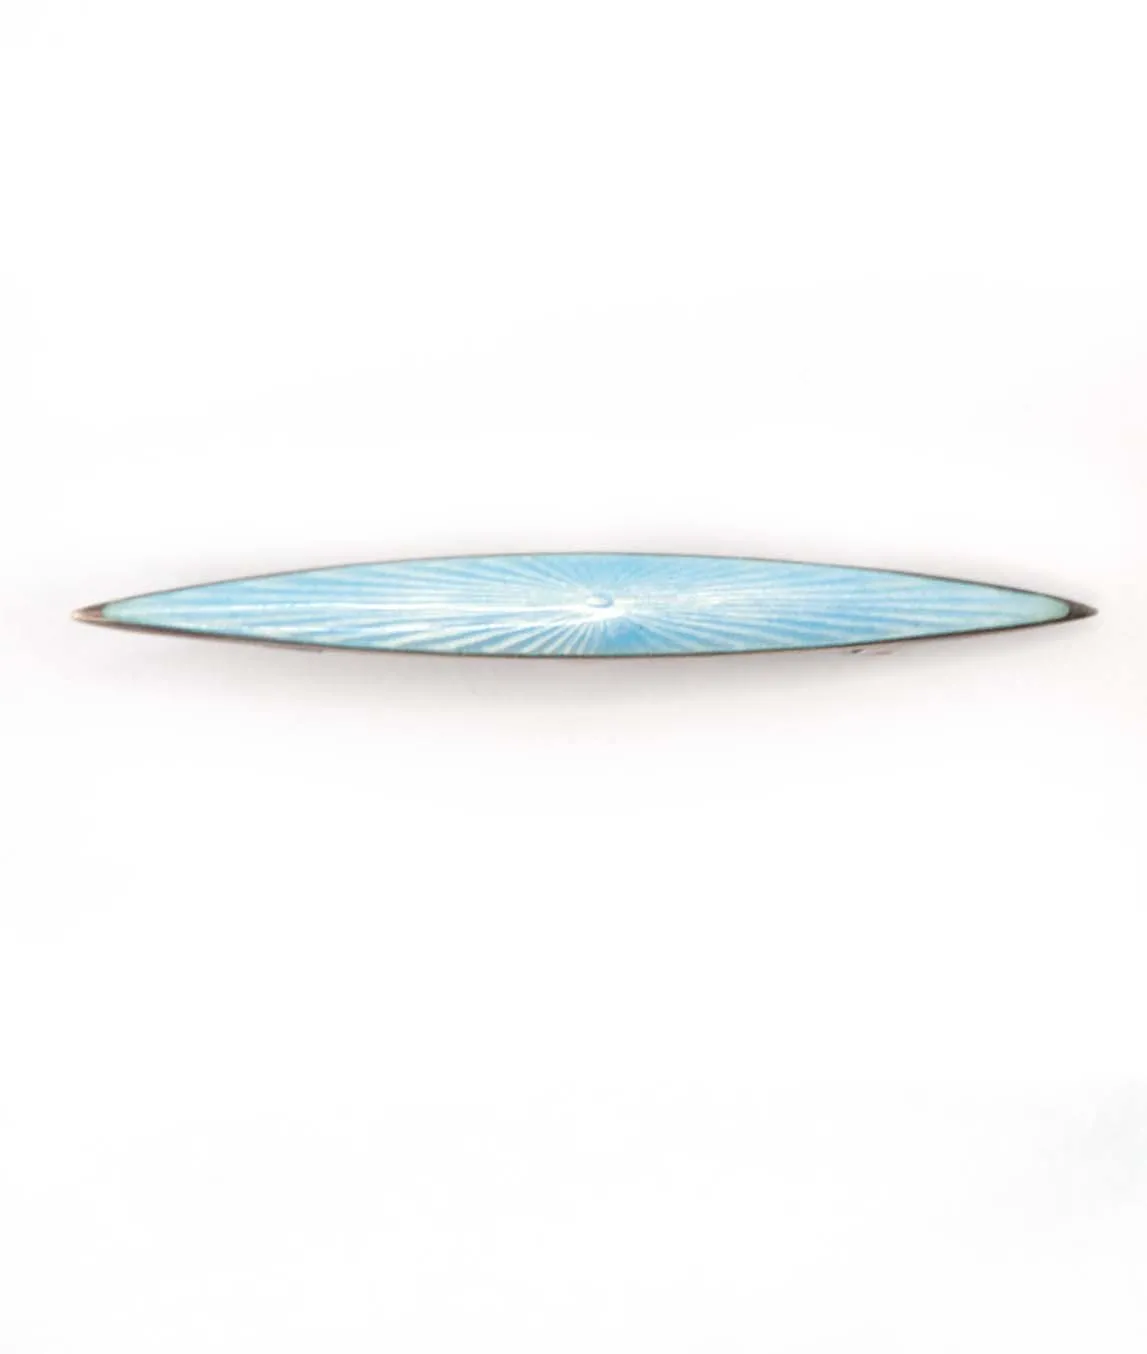 Light blue enamel on silver bar brooch with silver perimeter by Marius Hammer